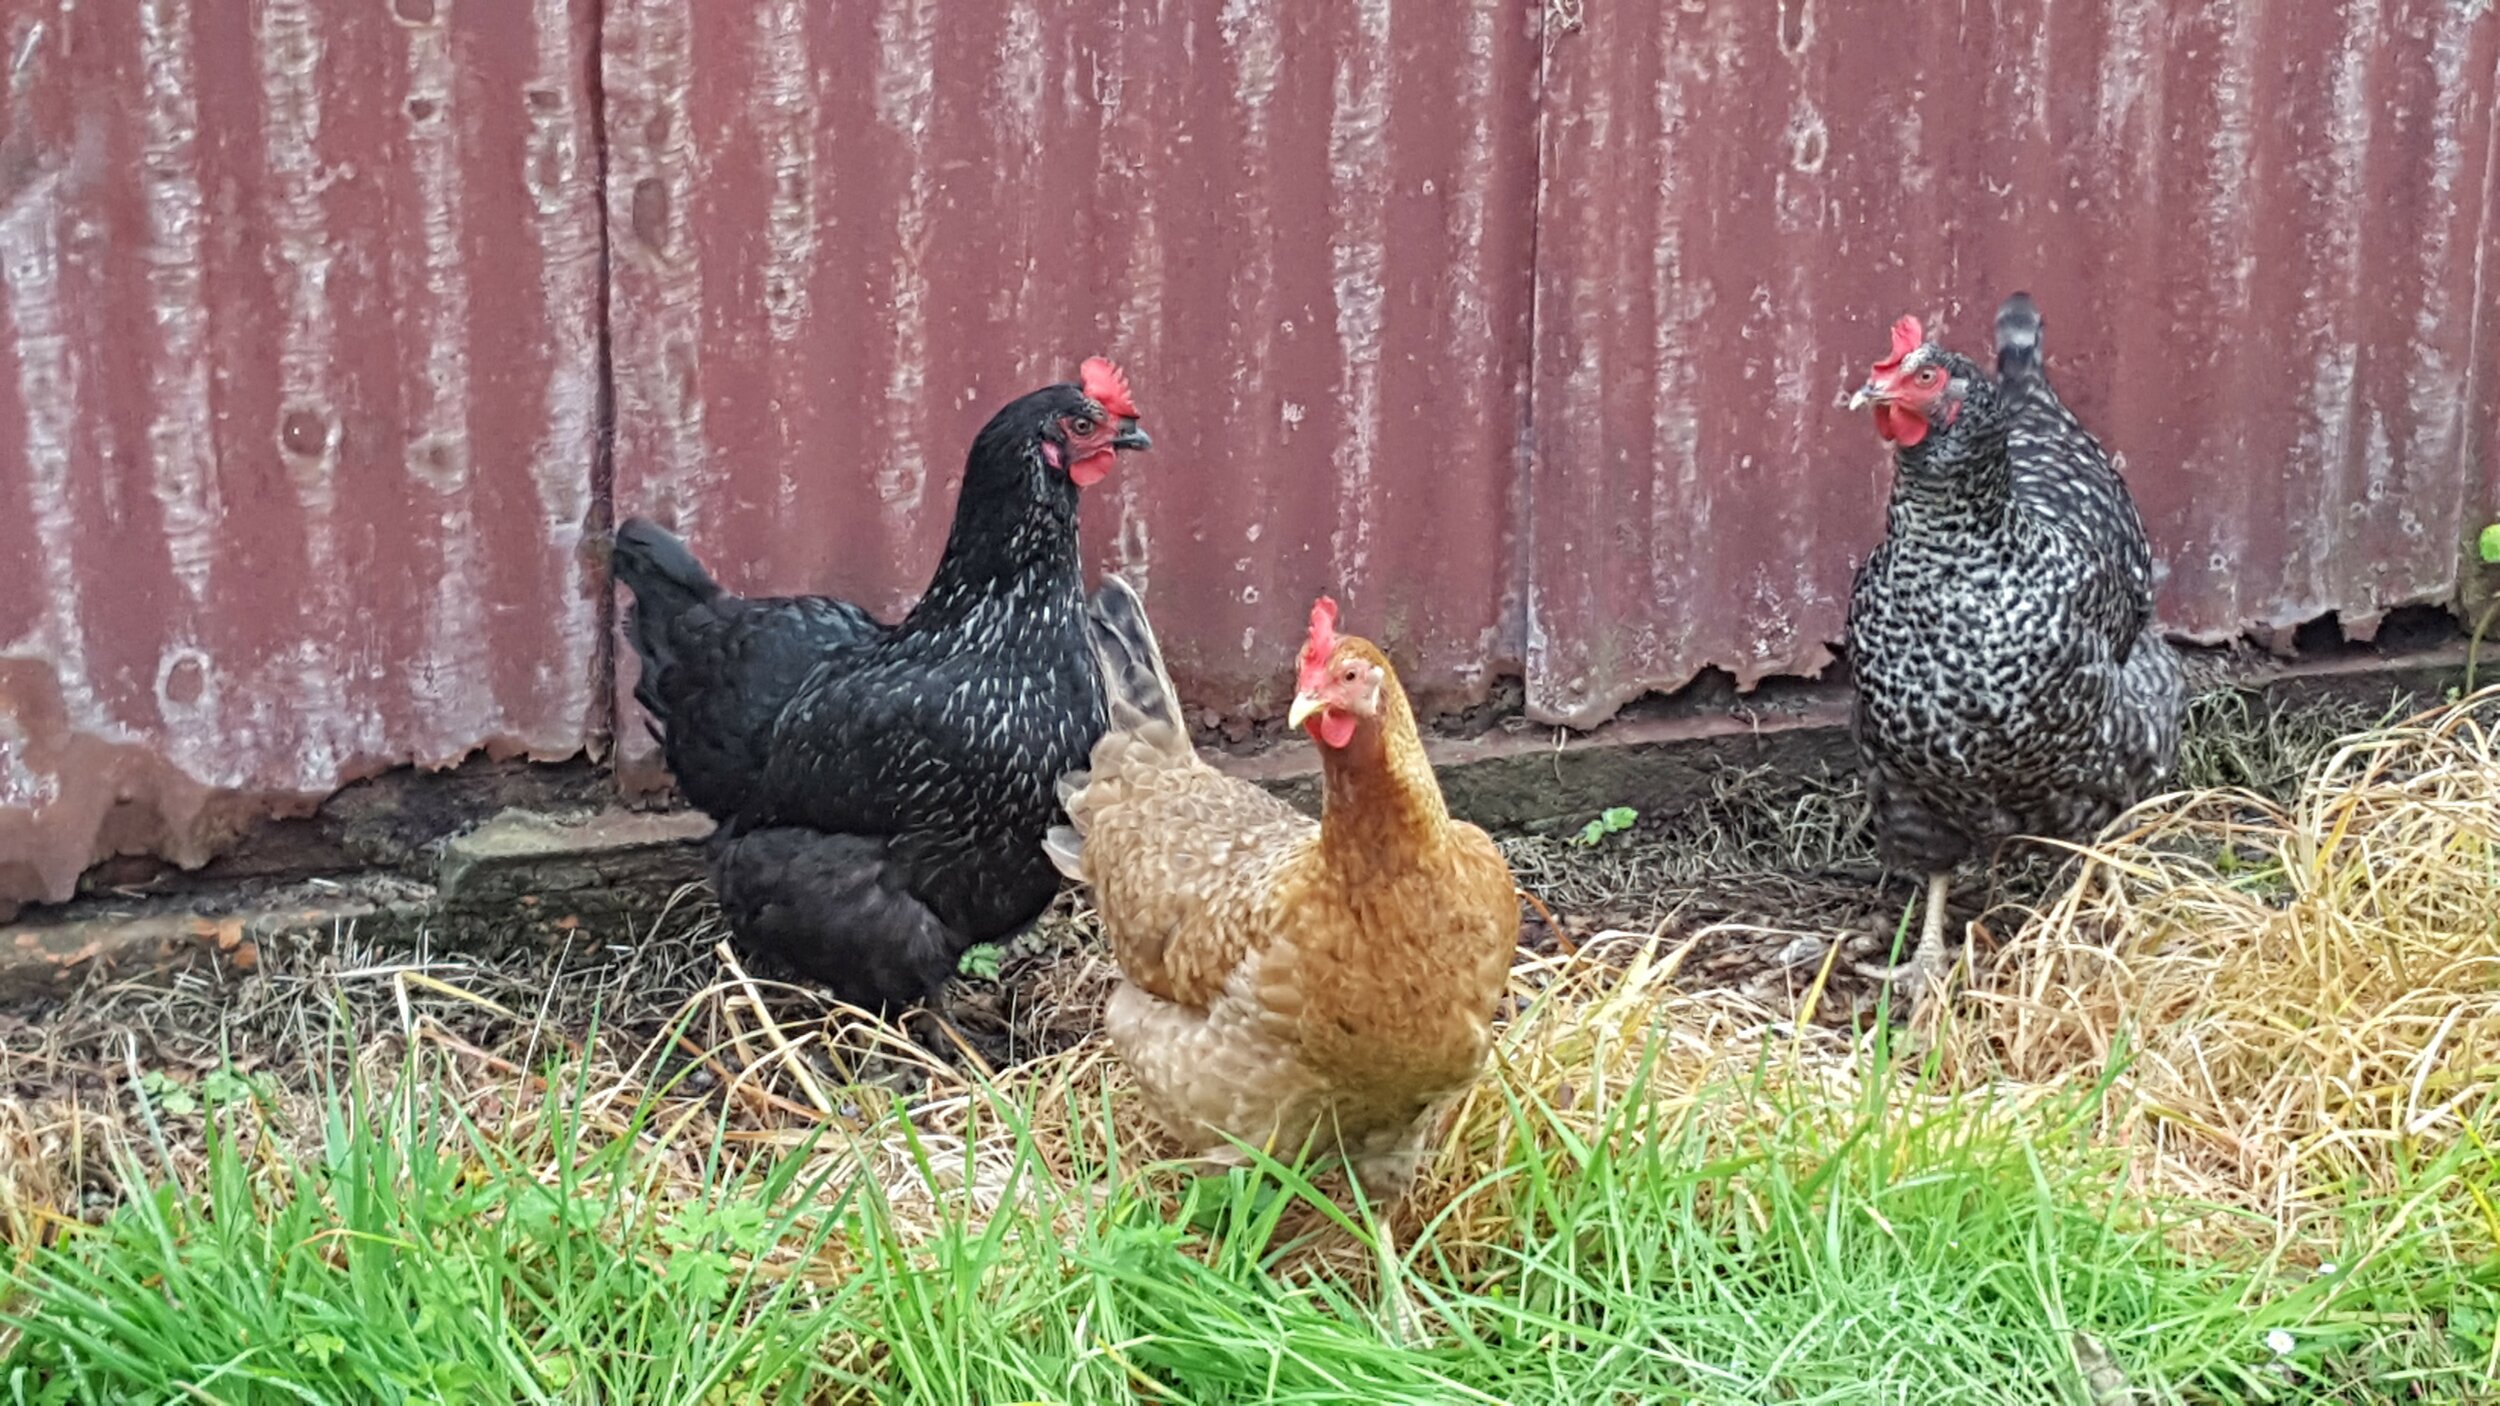 Nancy, Joan and Ada - The Scottish Countryman's hens